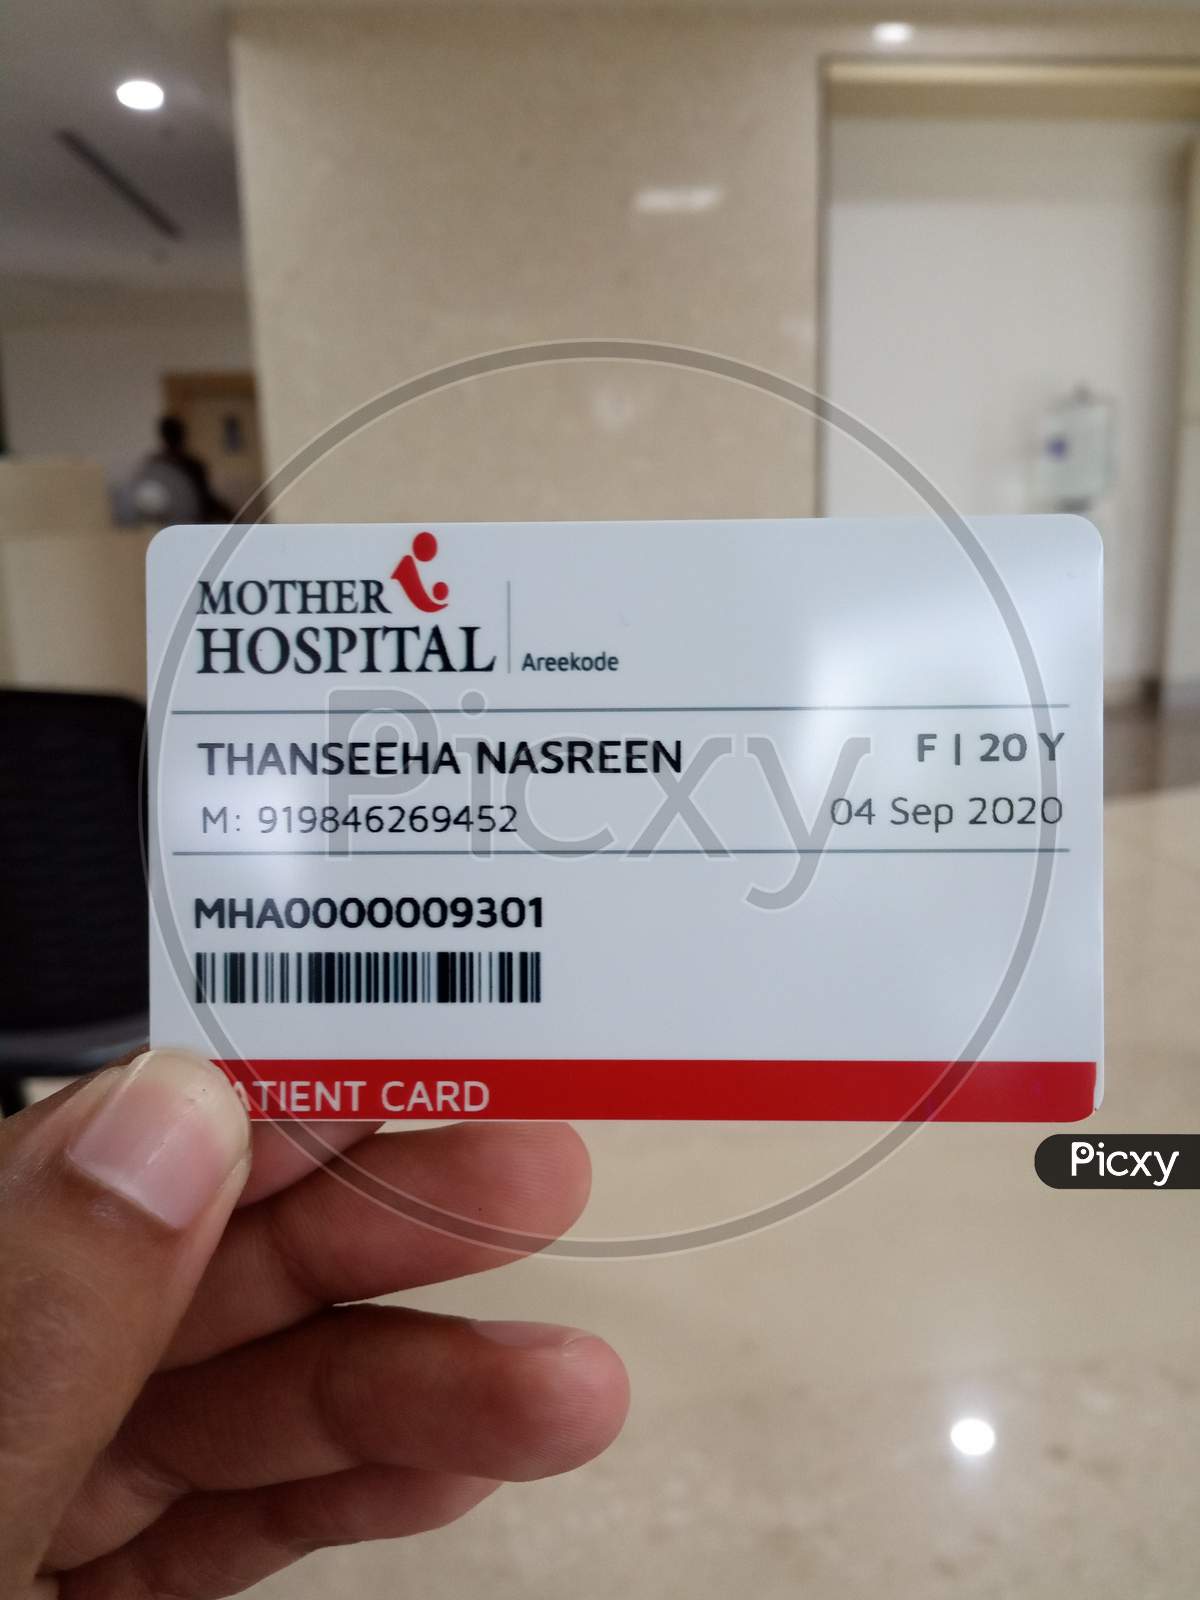 Hospital identity card